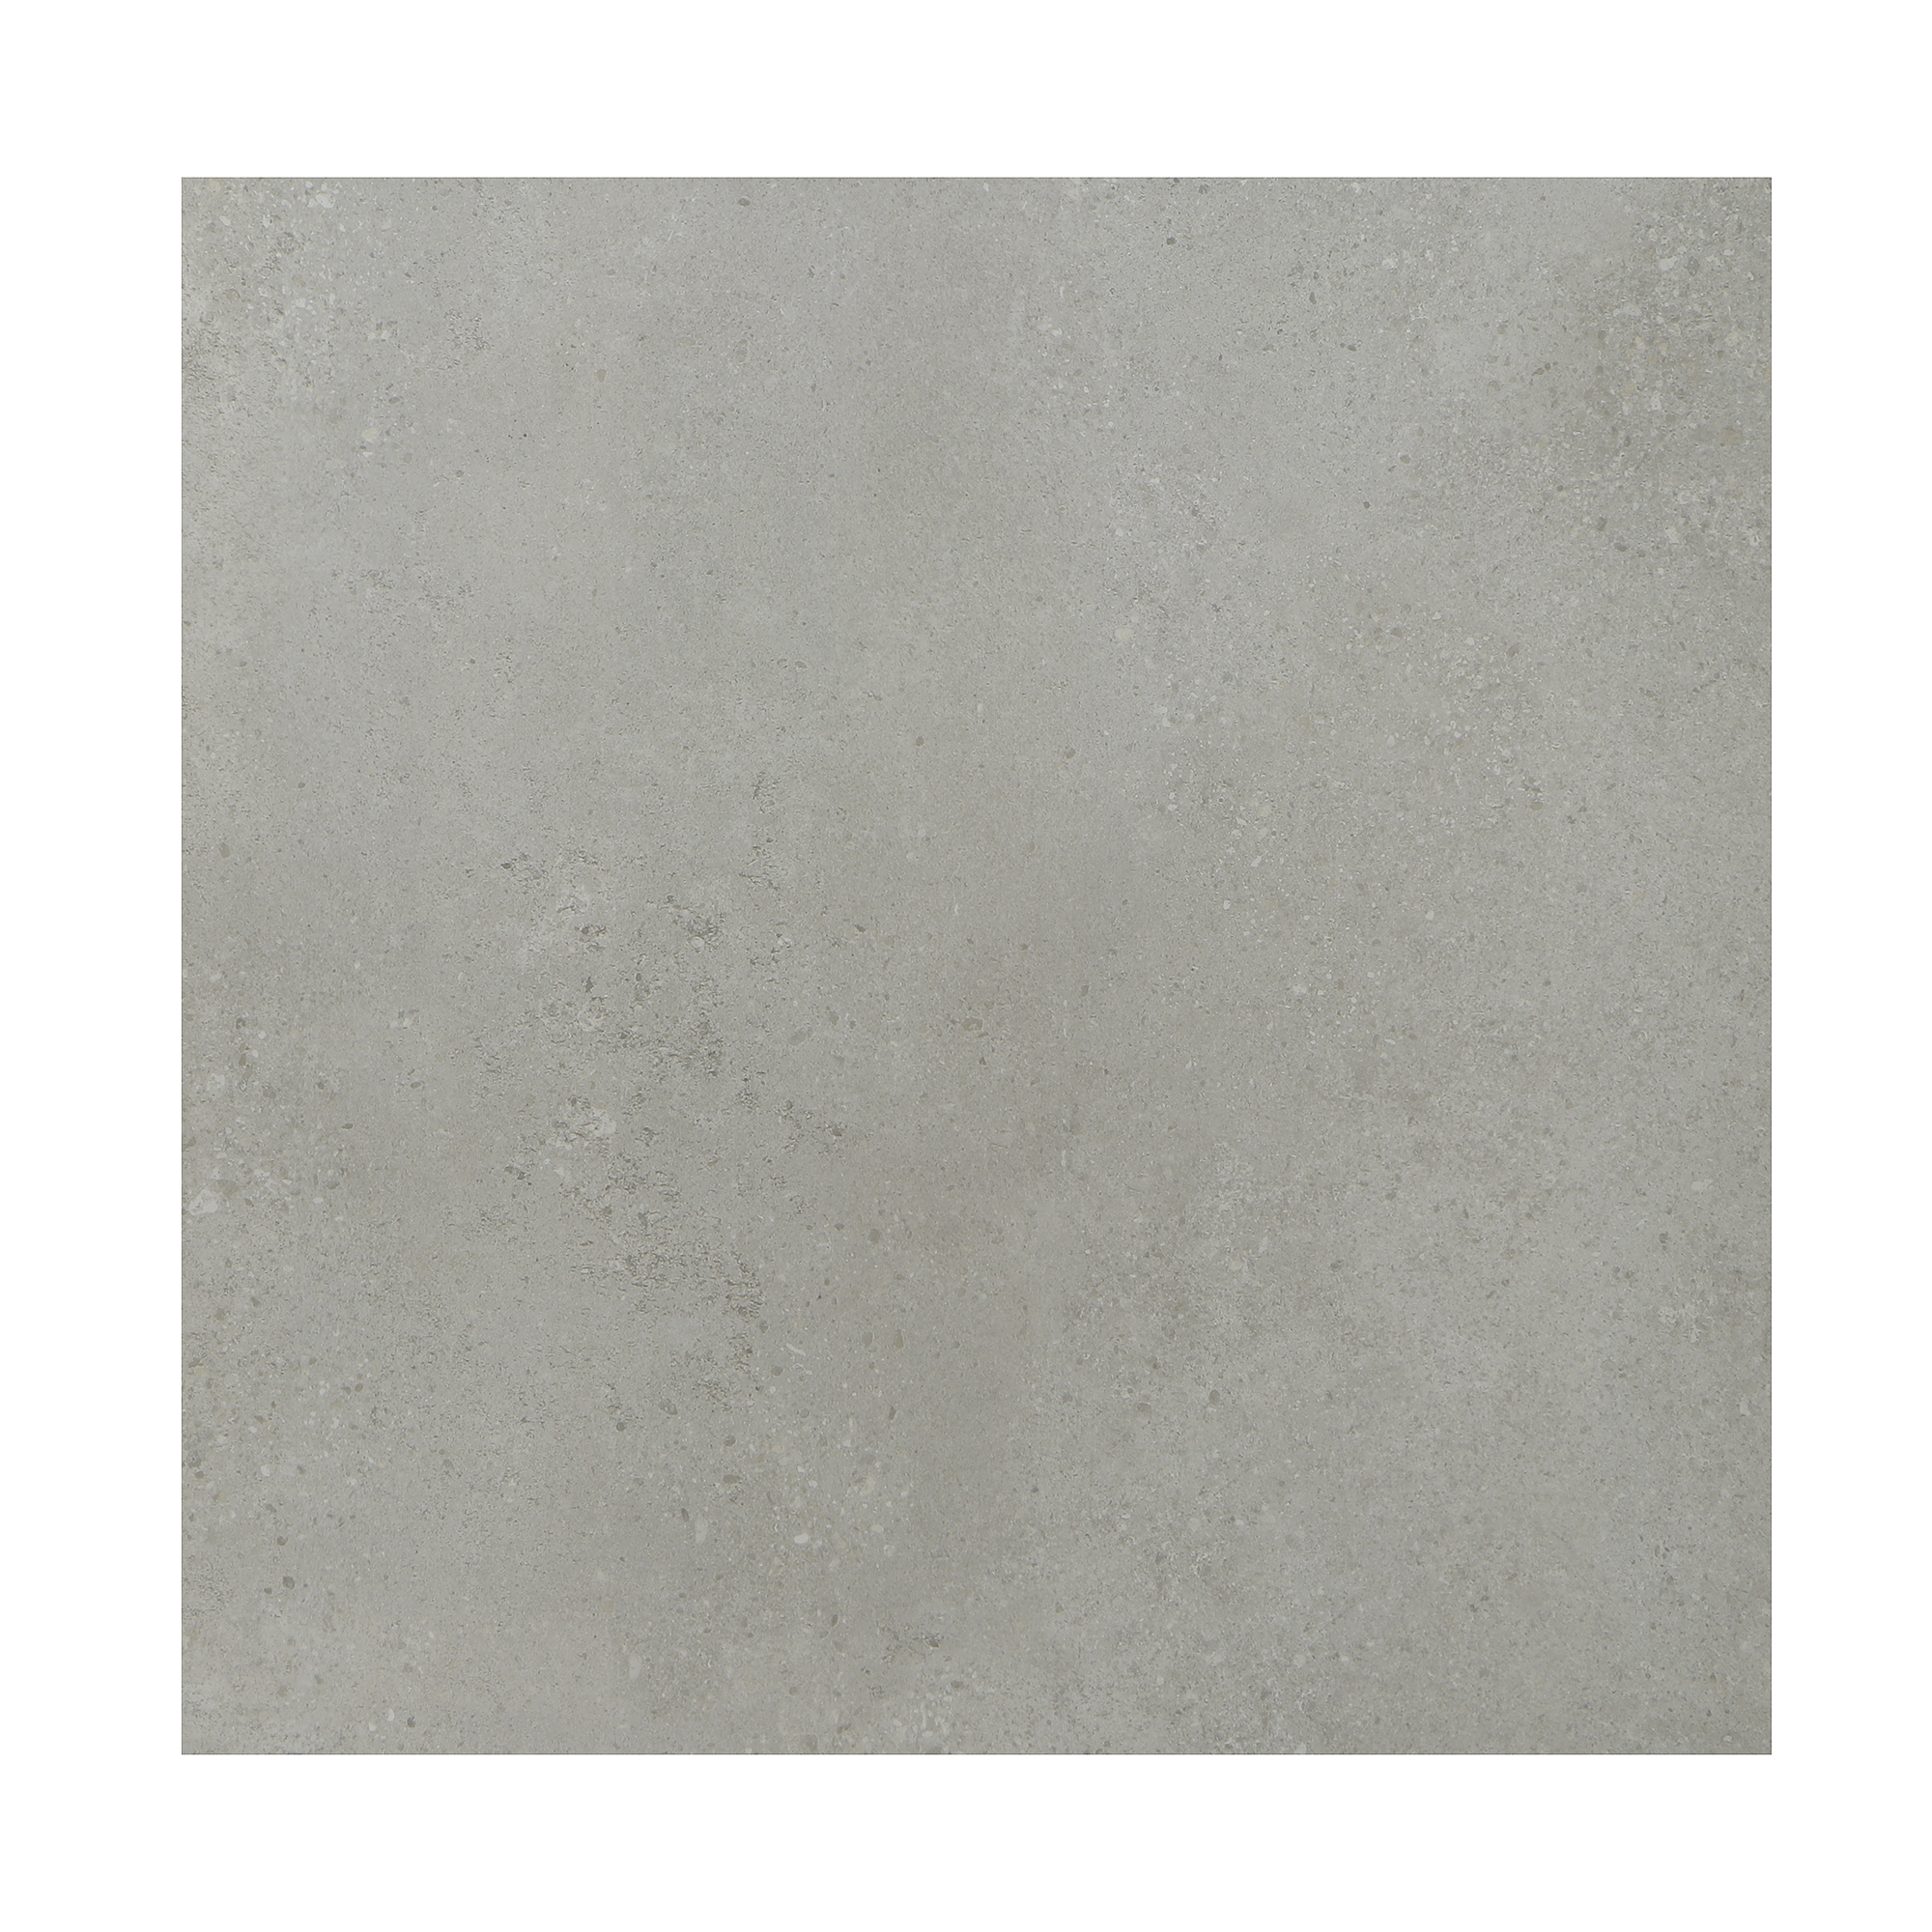 Плитка напольная Cristacer AVENUE GREY GR 59,2х59,2, цвет серый - фото 1